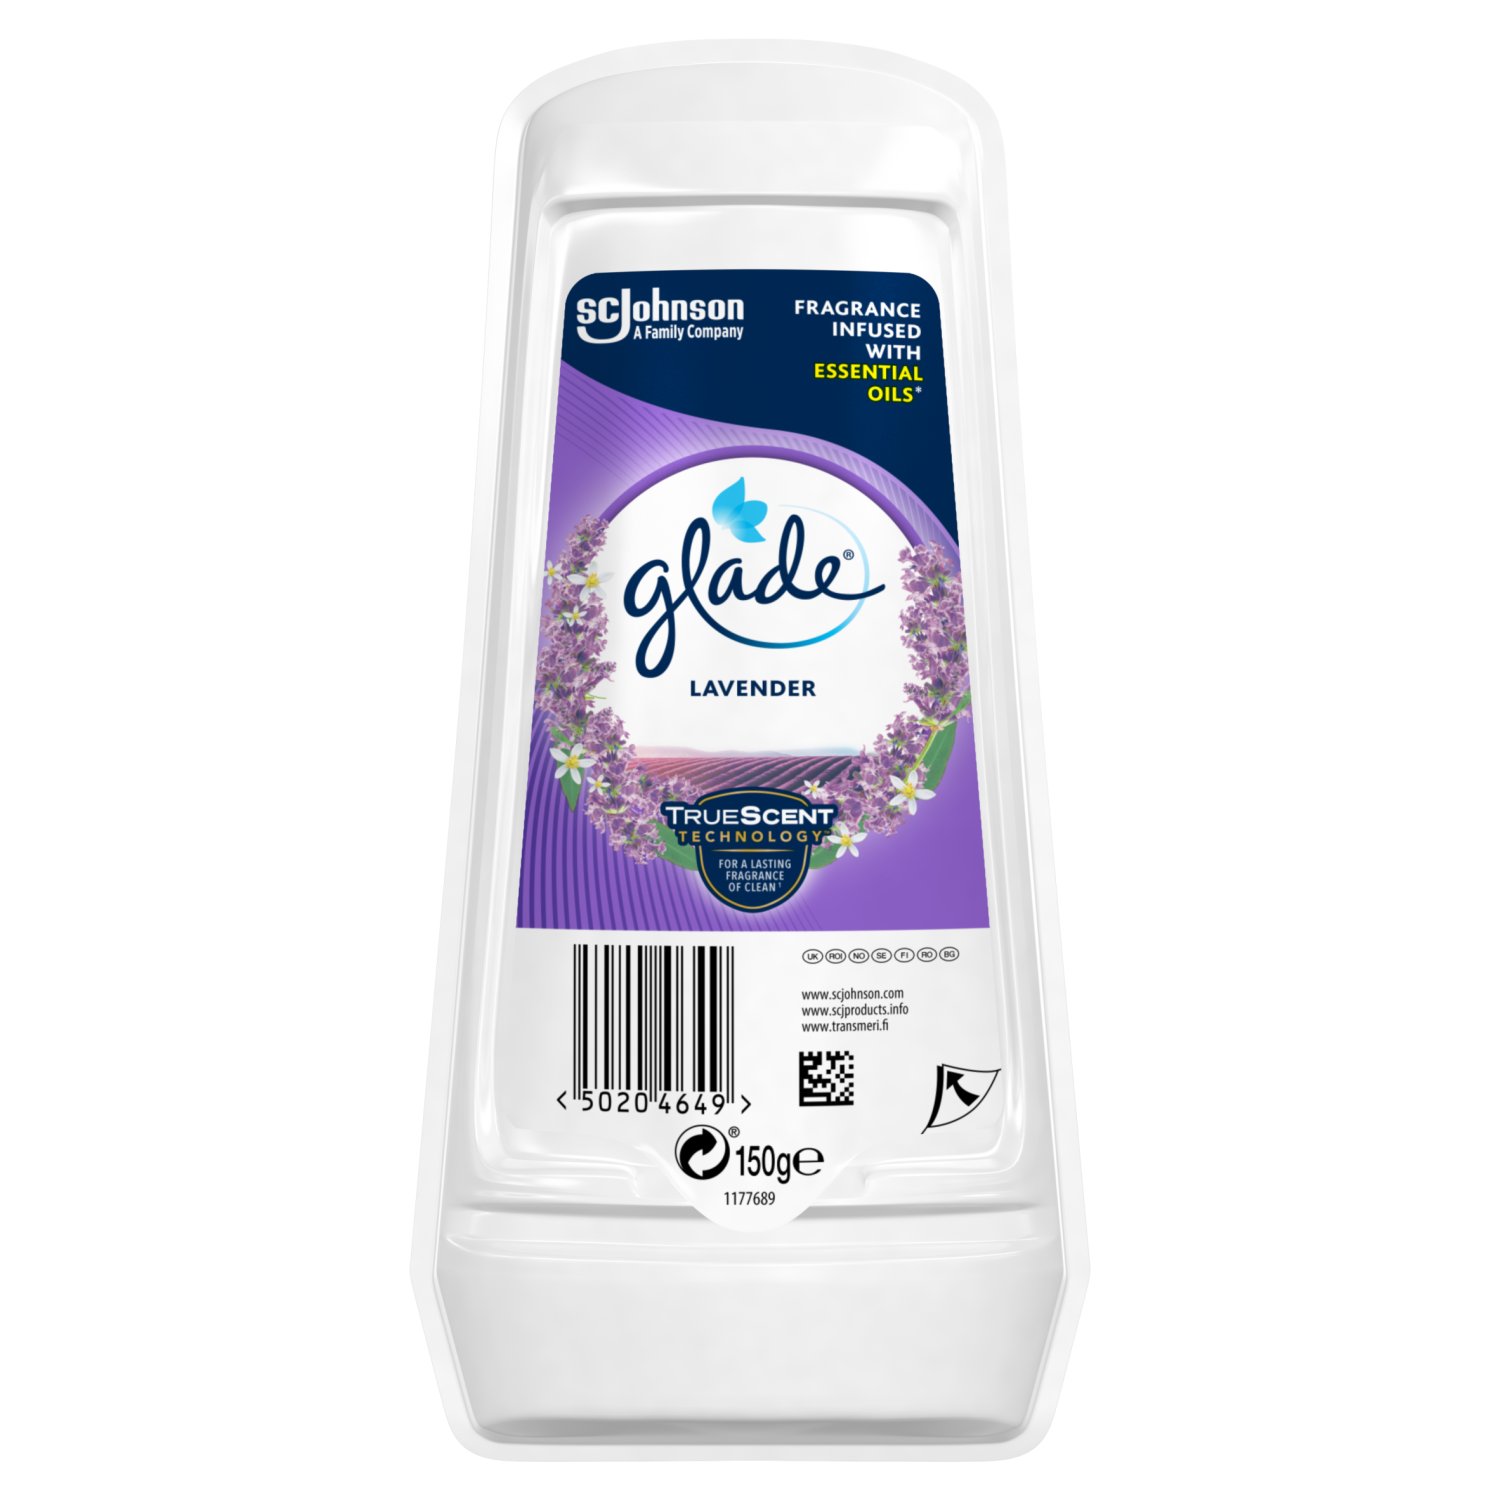 Glade Lavender & Jasmine Solid Air Freshener (150 g)